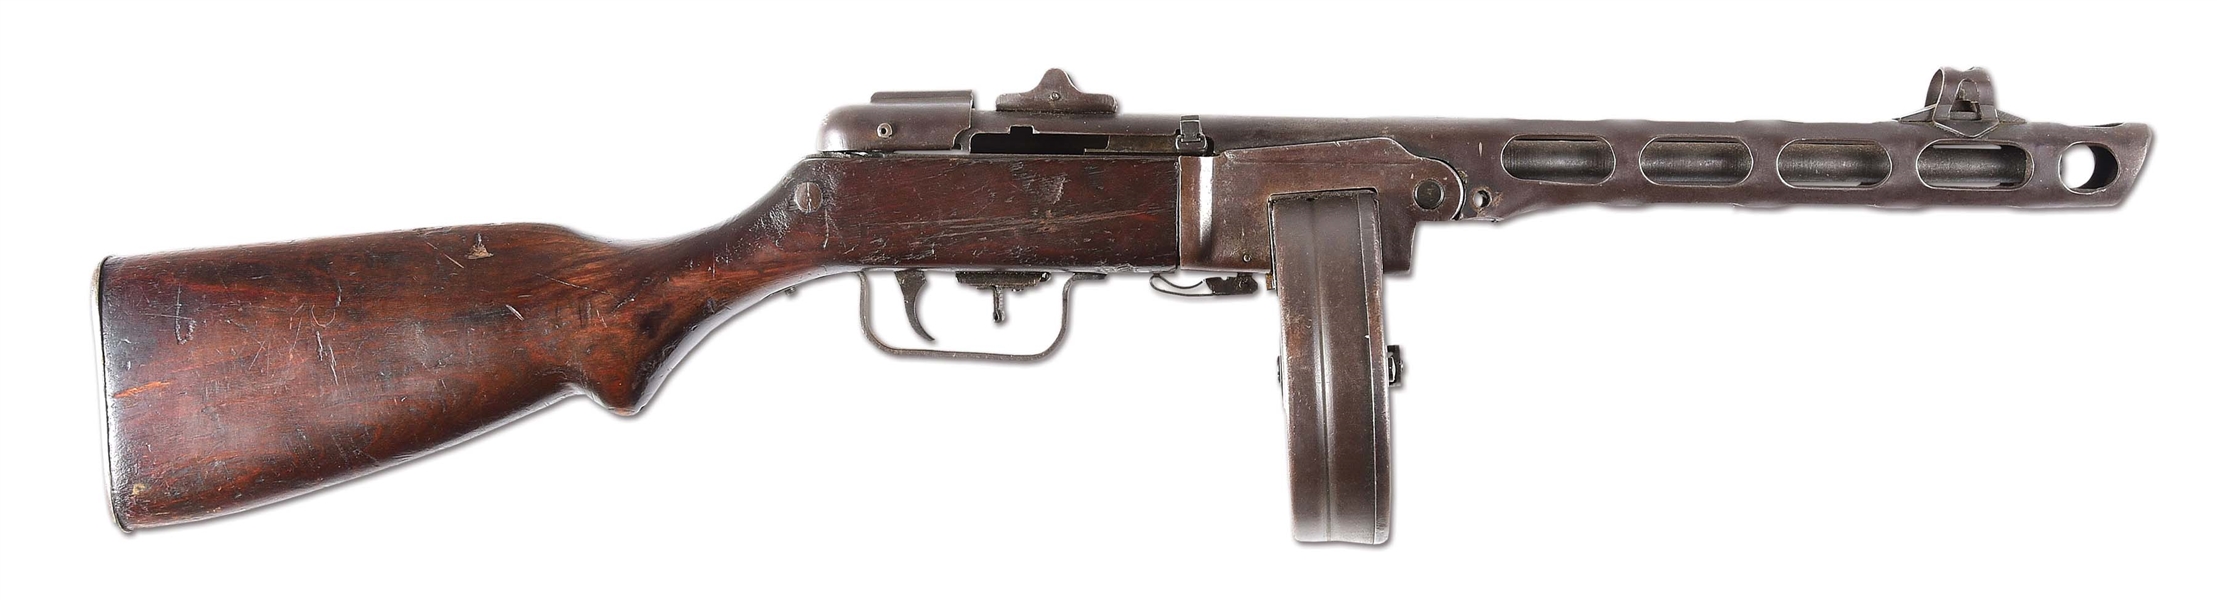 (N) DESIRABLE RUSSIAN WORLD WAR II PPSH-41 MACHINE GUN (CURIO & RELIC).